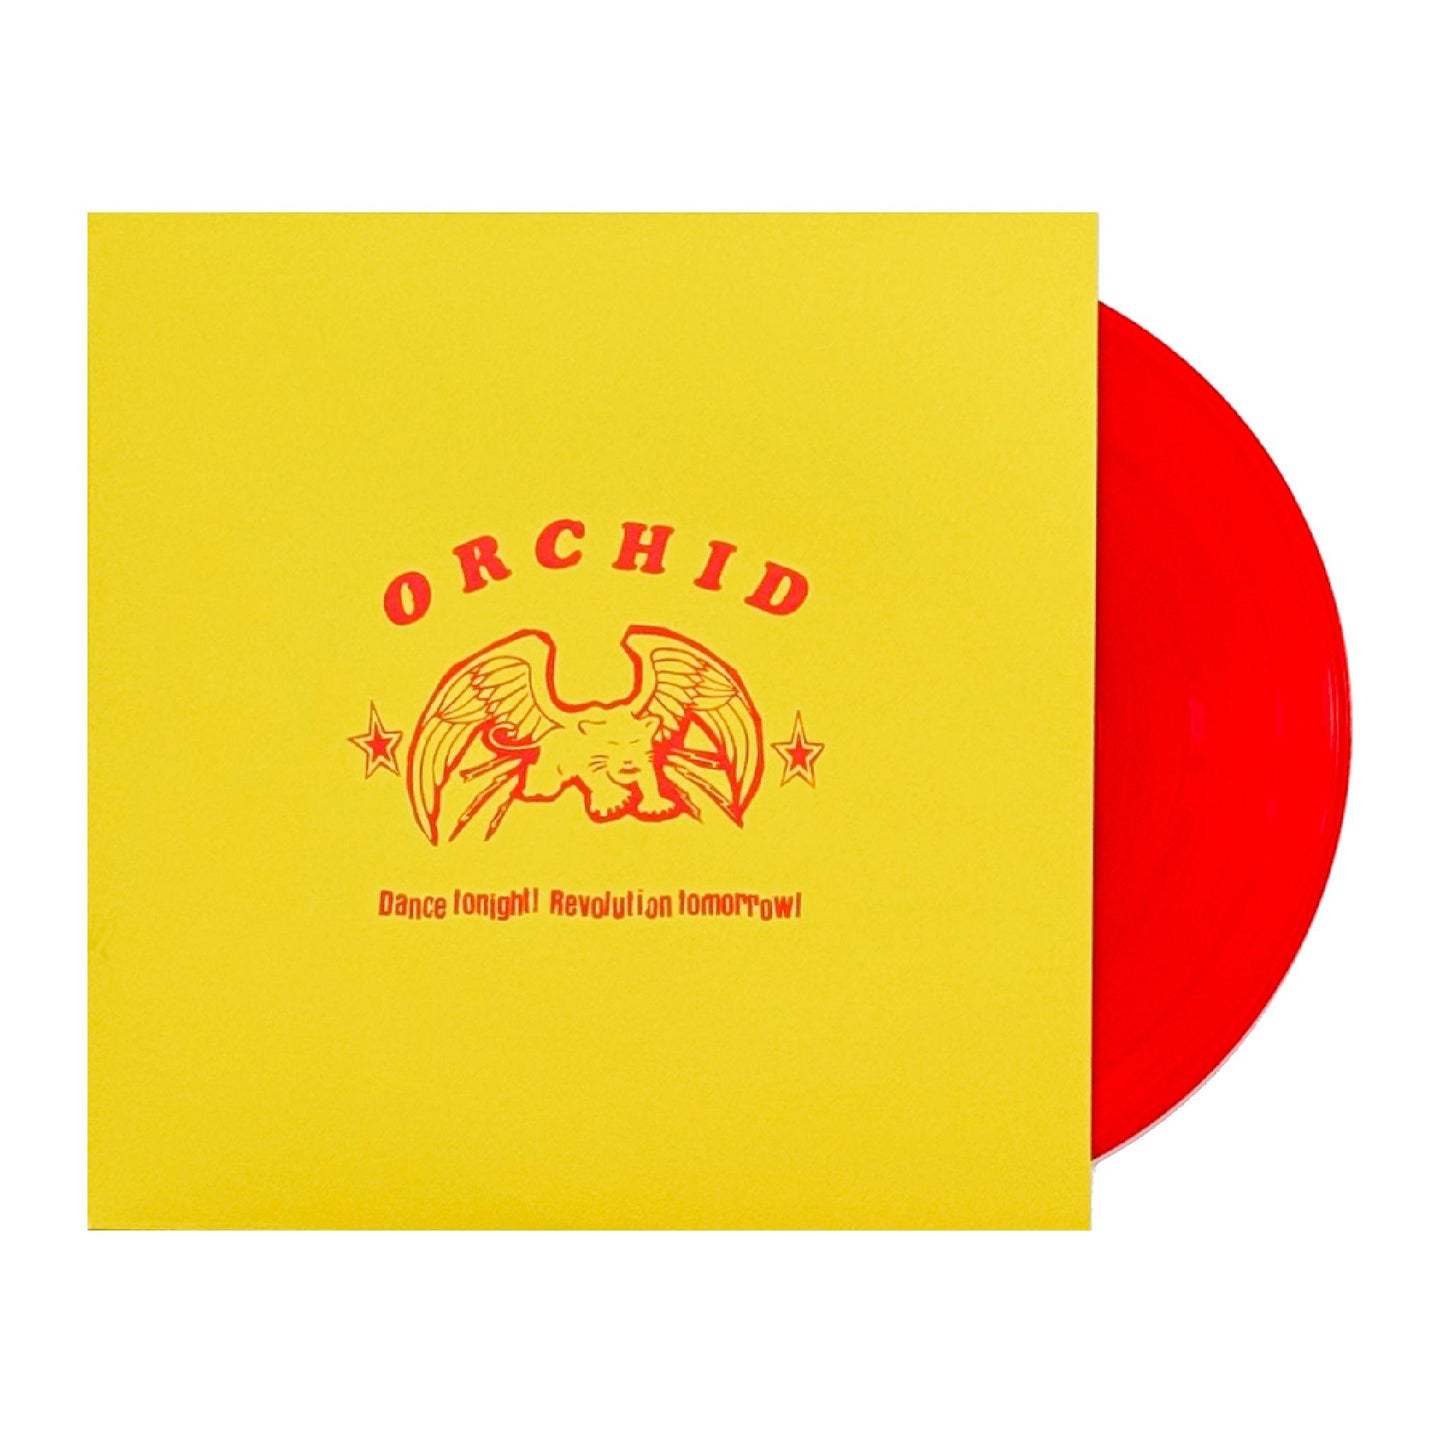 Orchid - Dance Tonight! Revolution Tomorrow! 10" LP (color vinyl)